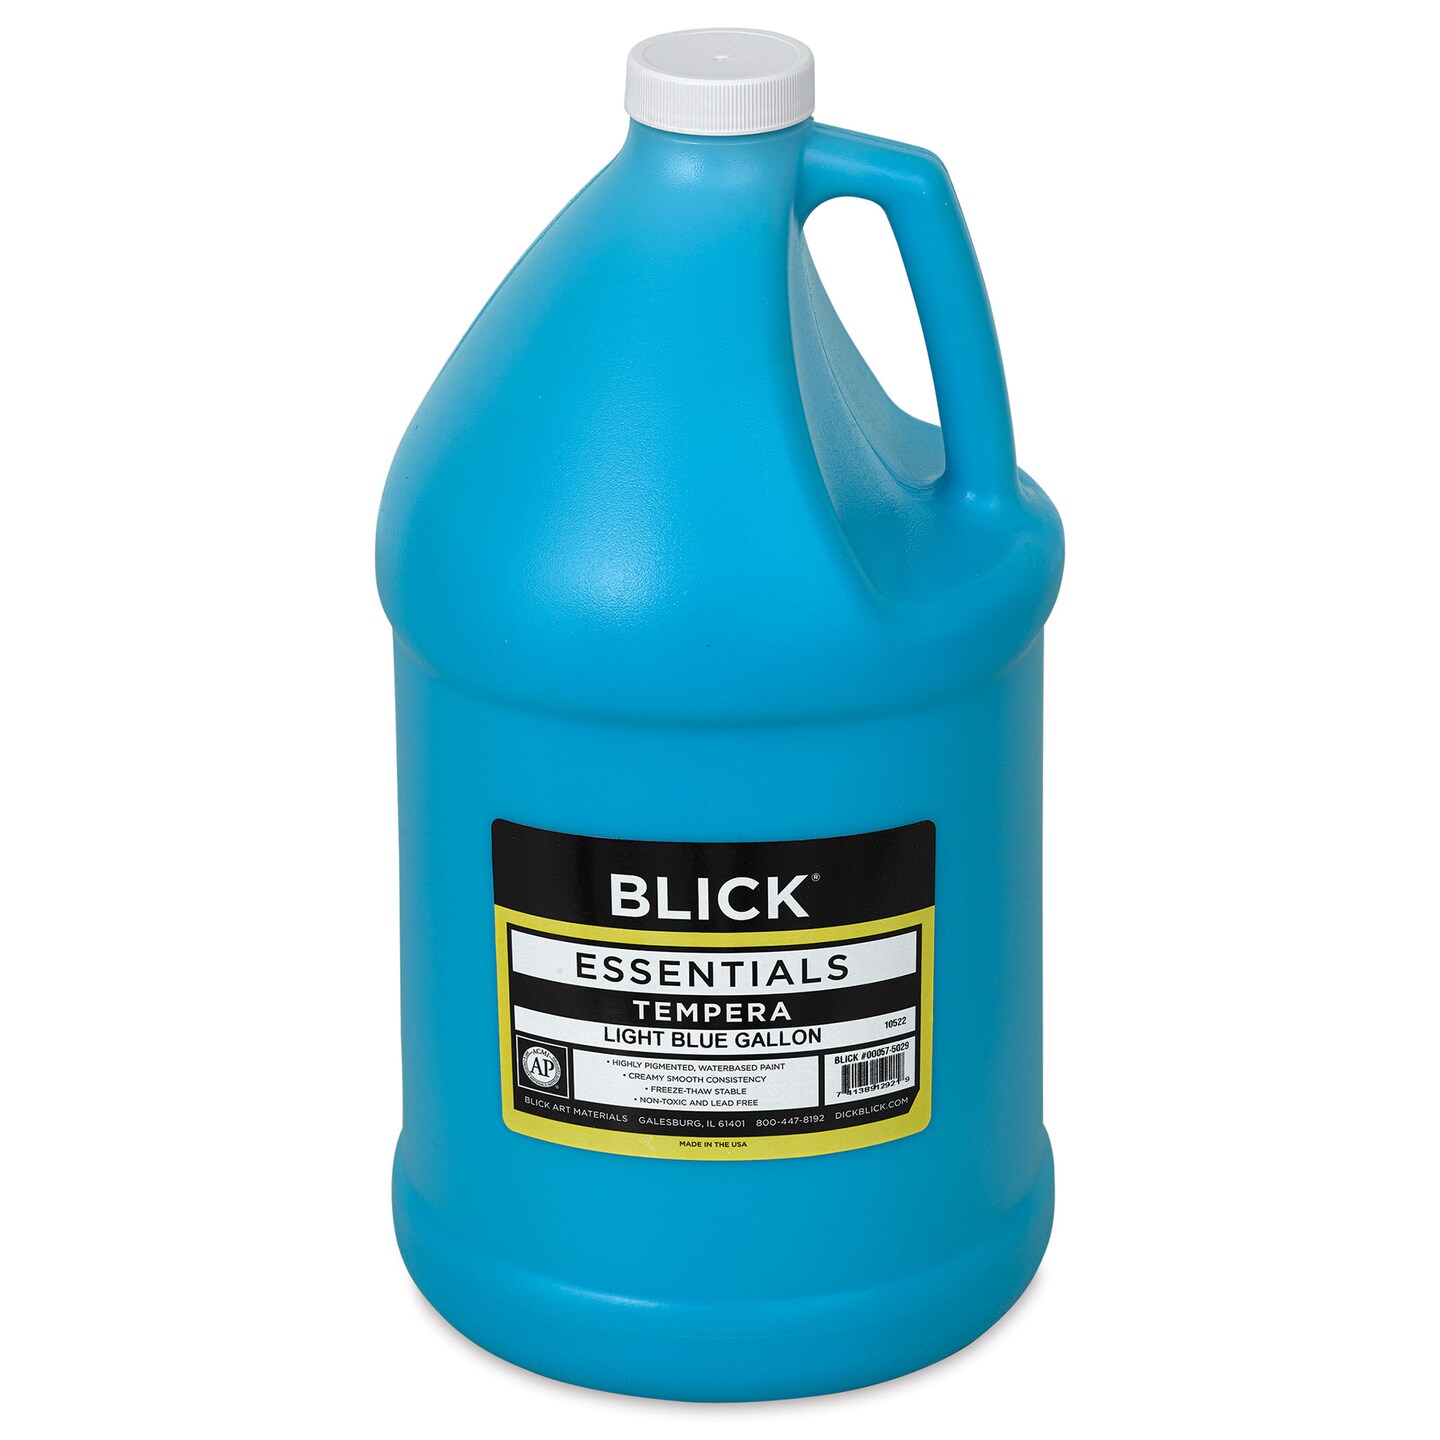 Blick Essentials Tempera - Light Blue, Gallon